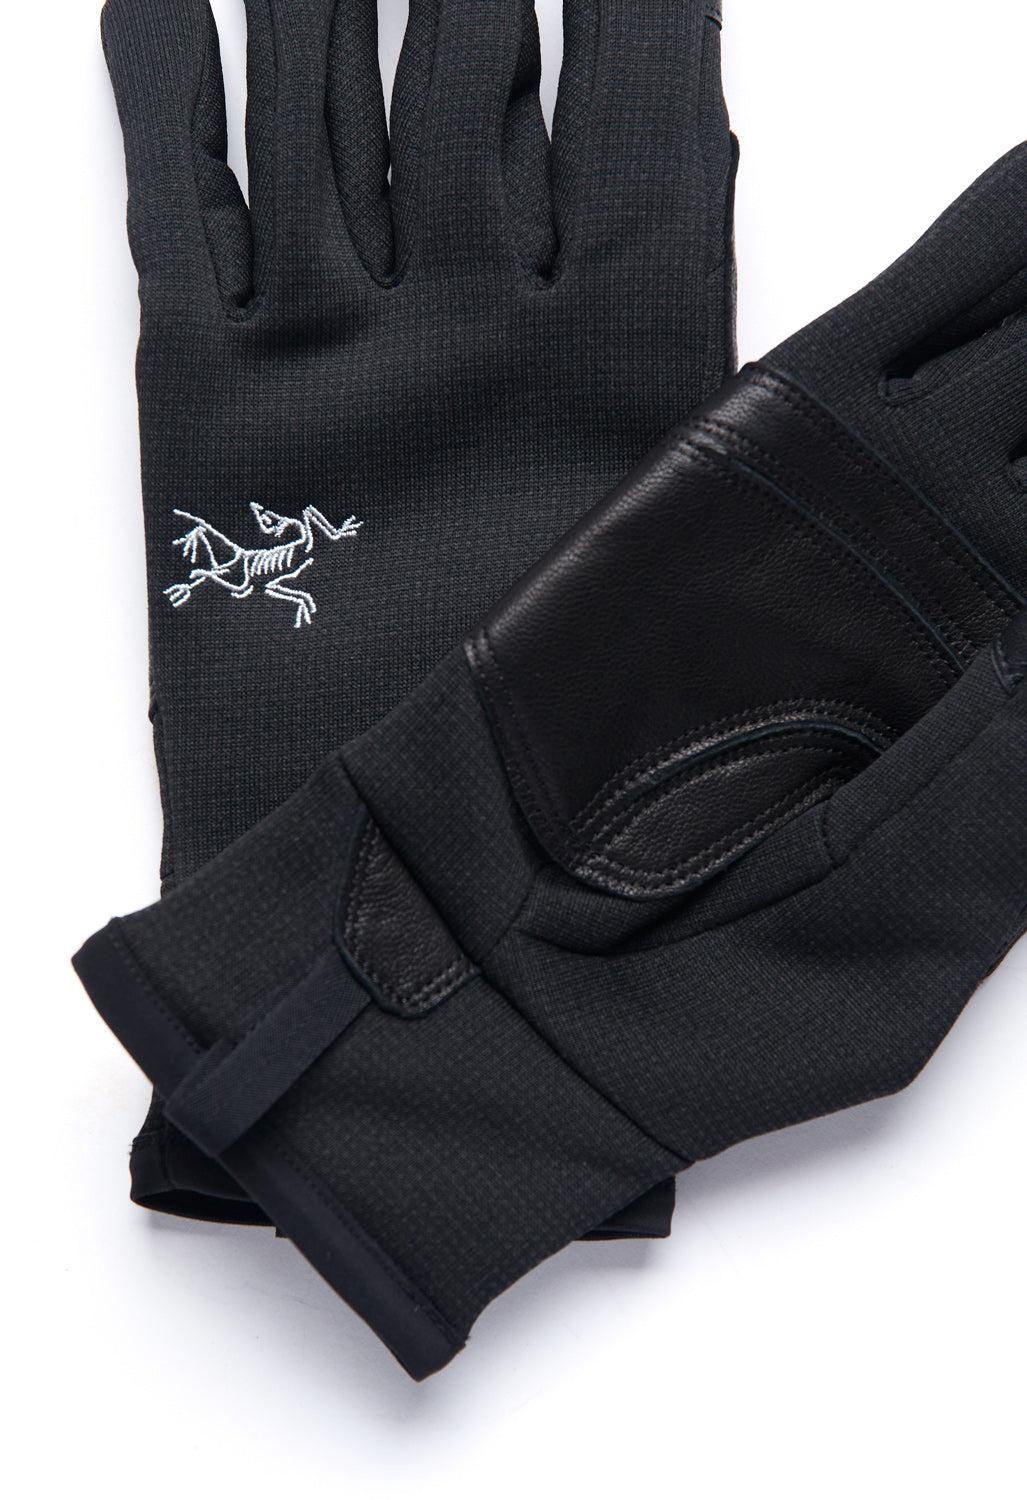 Arc'teryx Rivet Gloves - Black